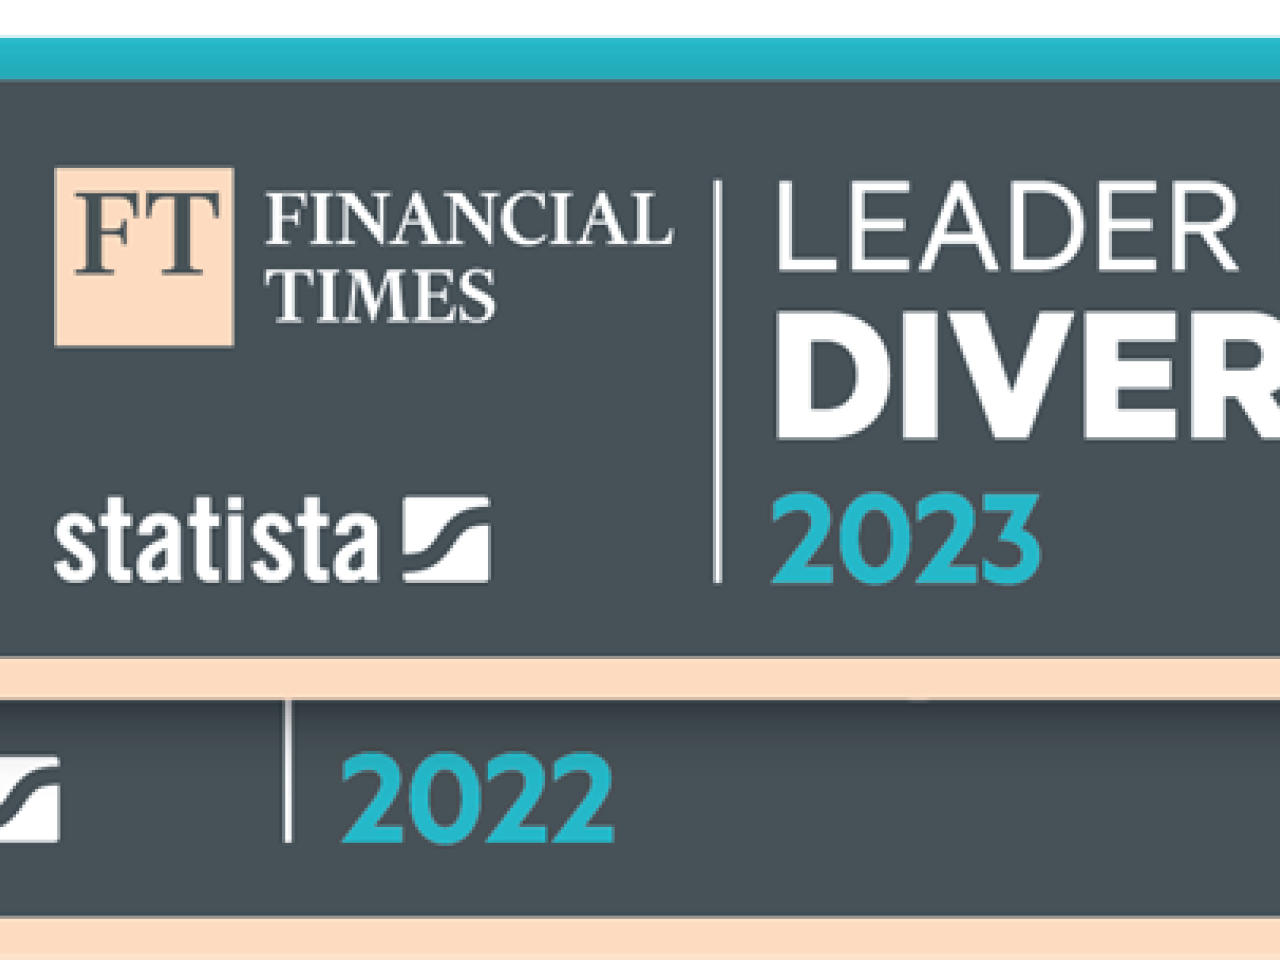 Financial Times Leader in Diversity Award 2023